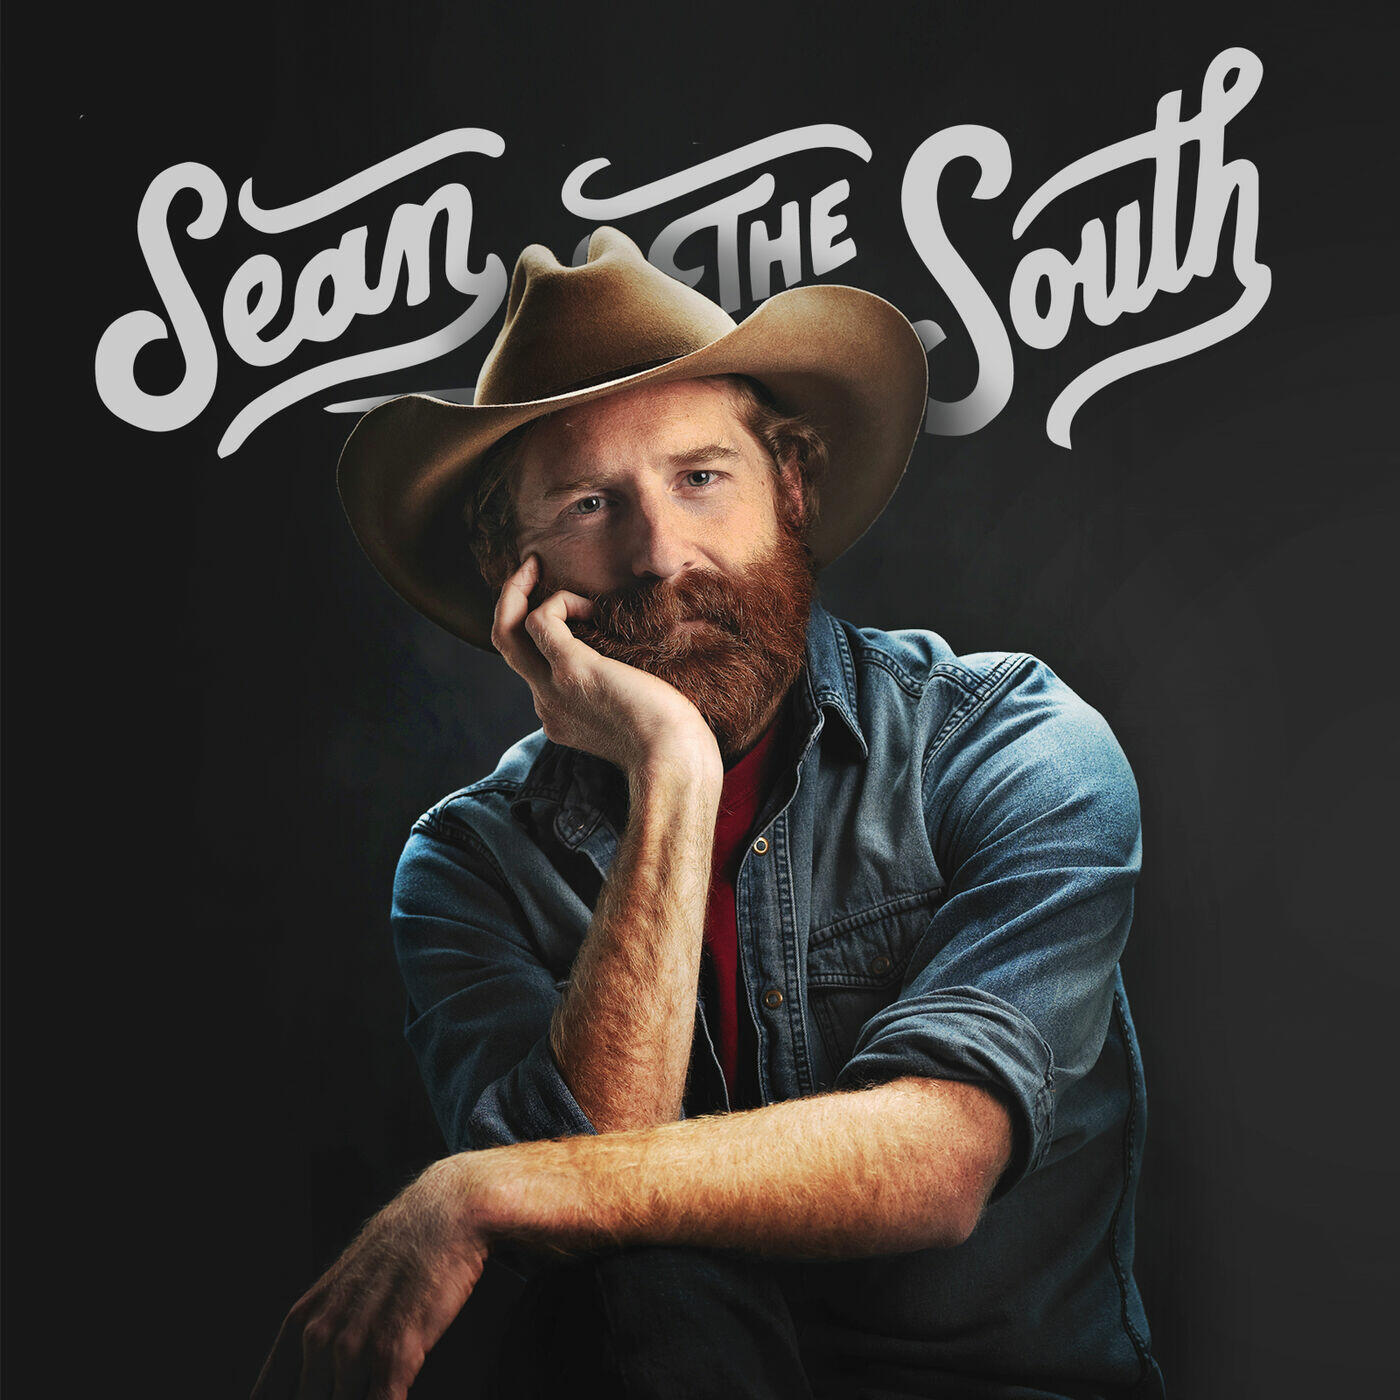 Corningware - Sean of the South